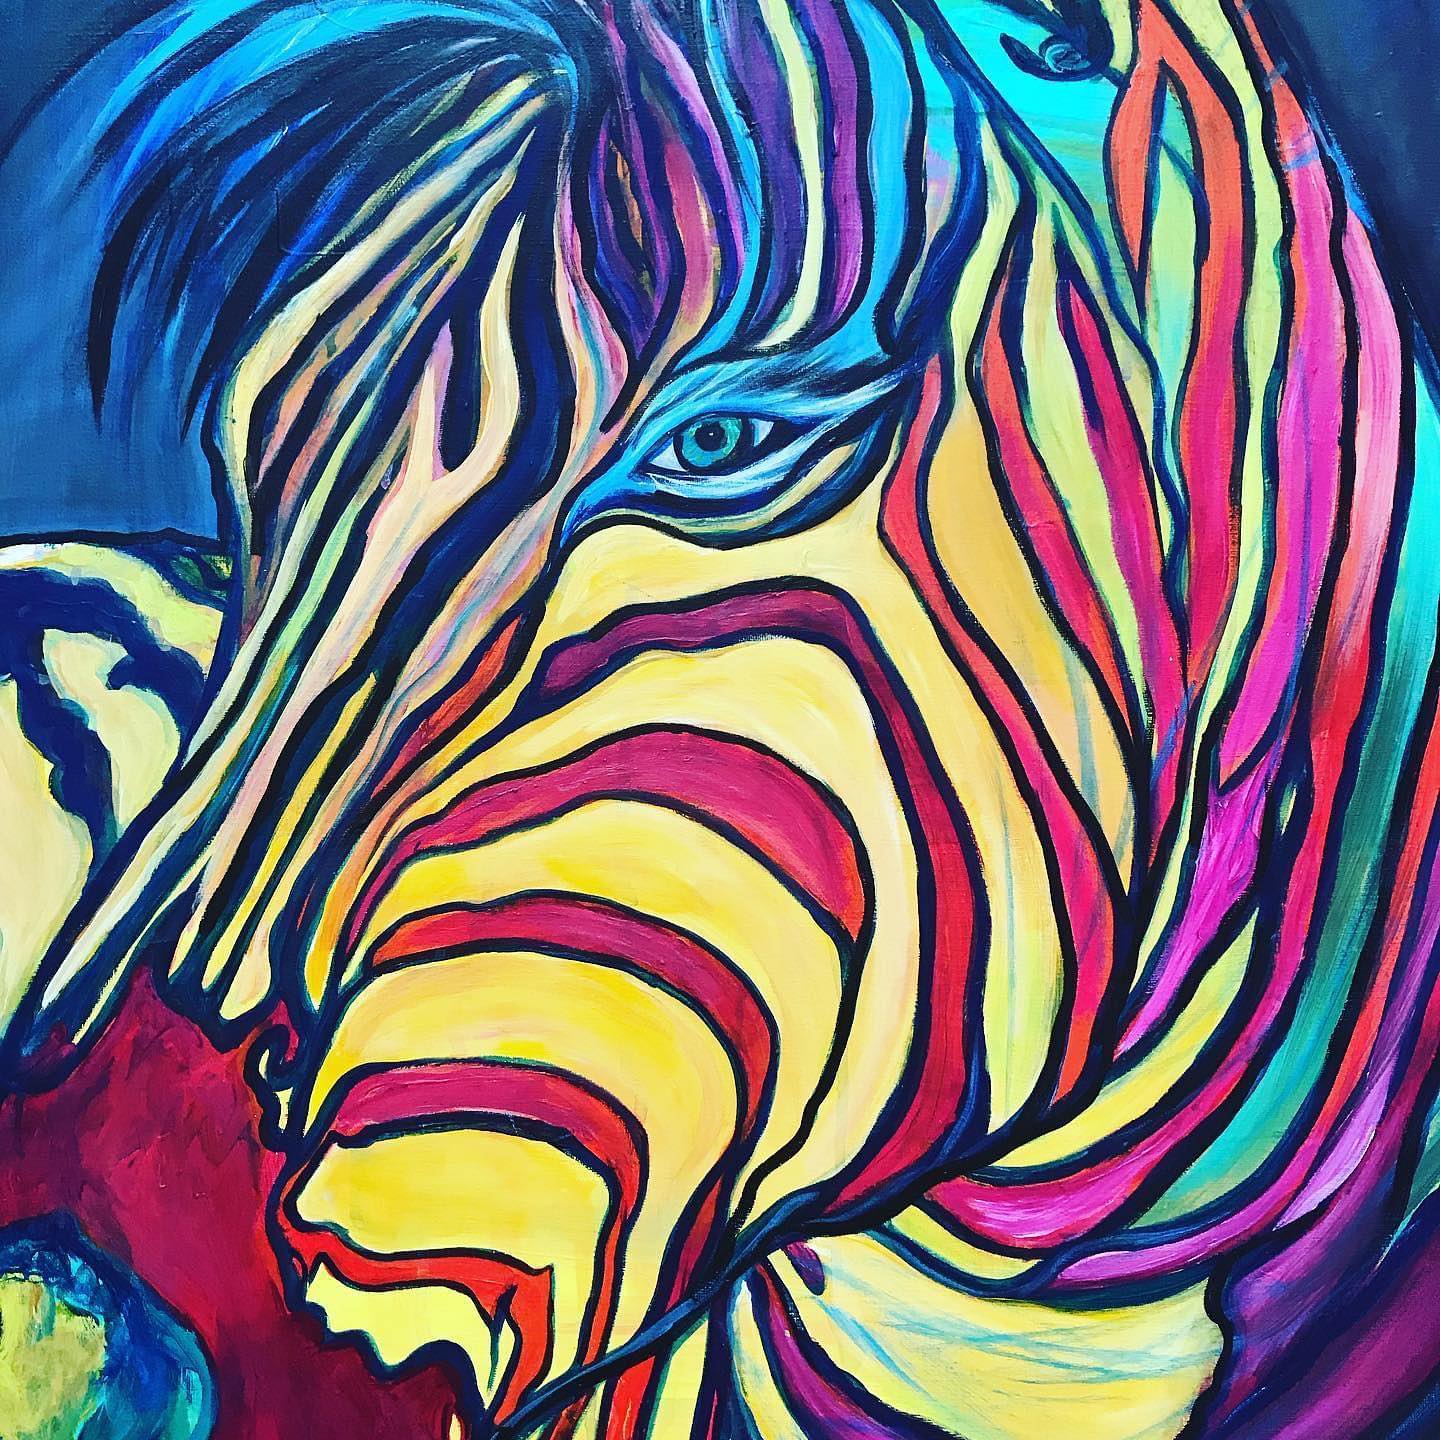 Zebra painted in rainbow colors.